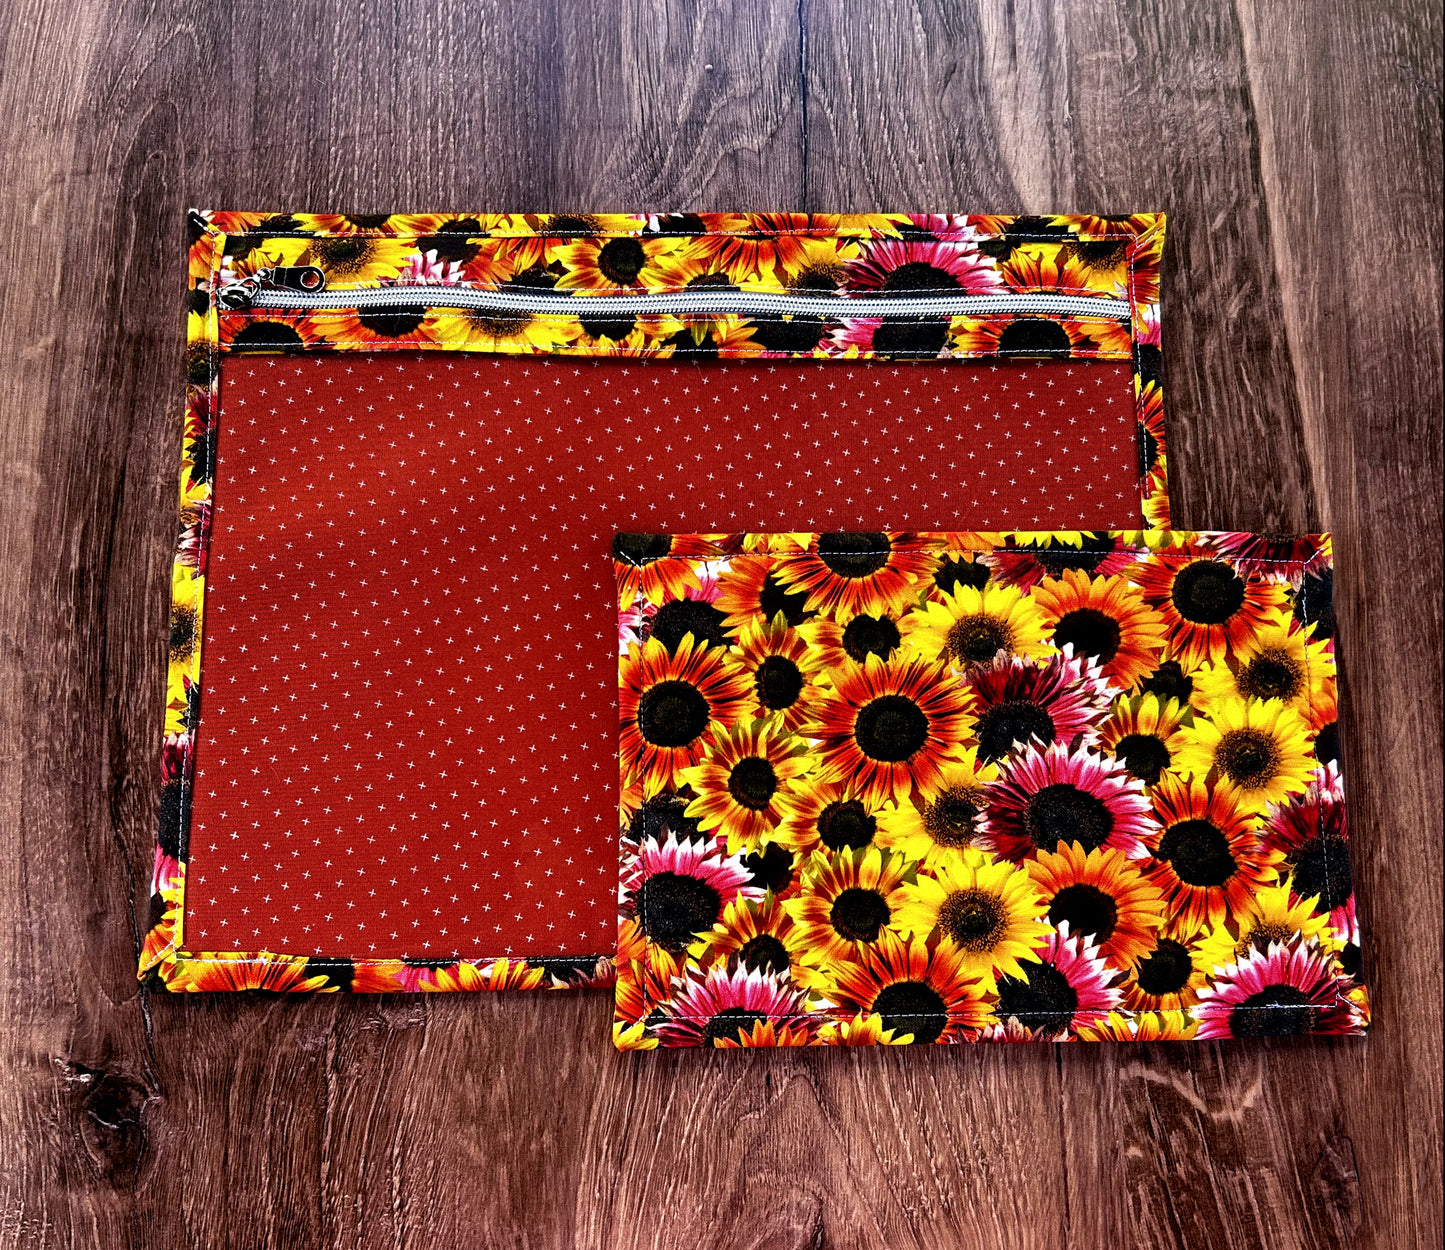 Vinyl Cross Stitch Project Bag - Embroidery bag - Project Bag - Knitting & Crochet Bag - Storage - Organizer - Notions - Flower - Sunflower